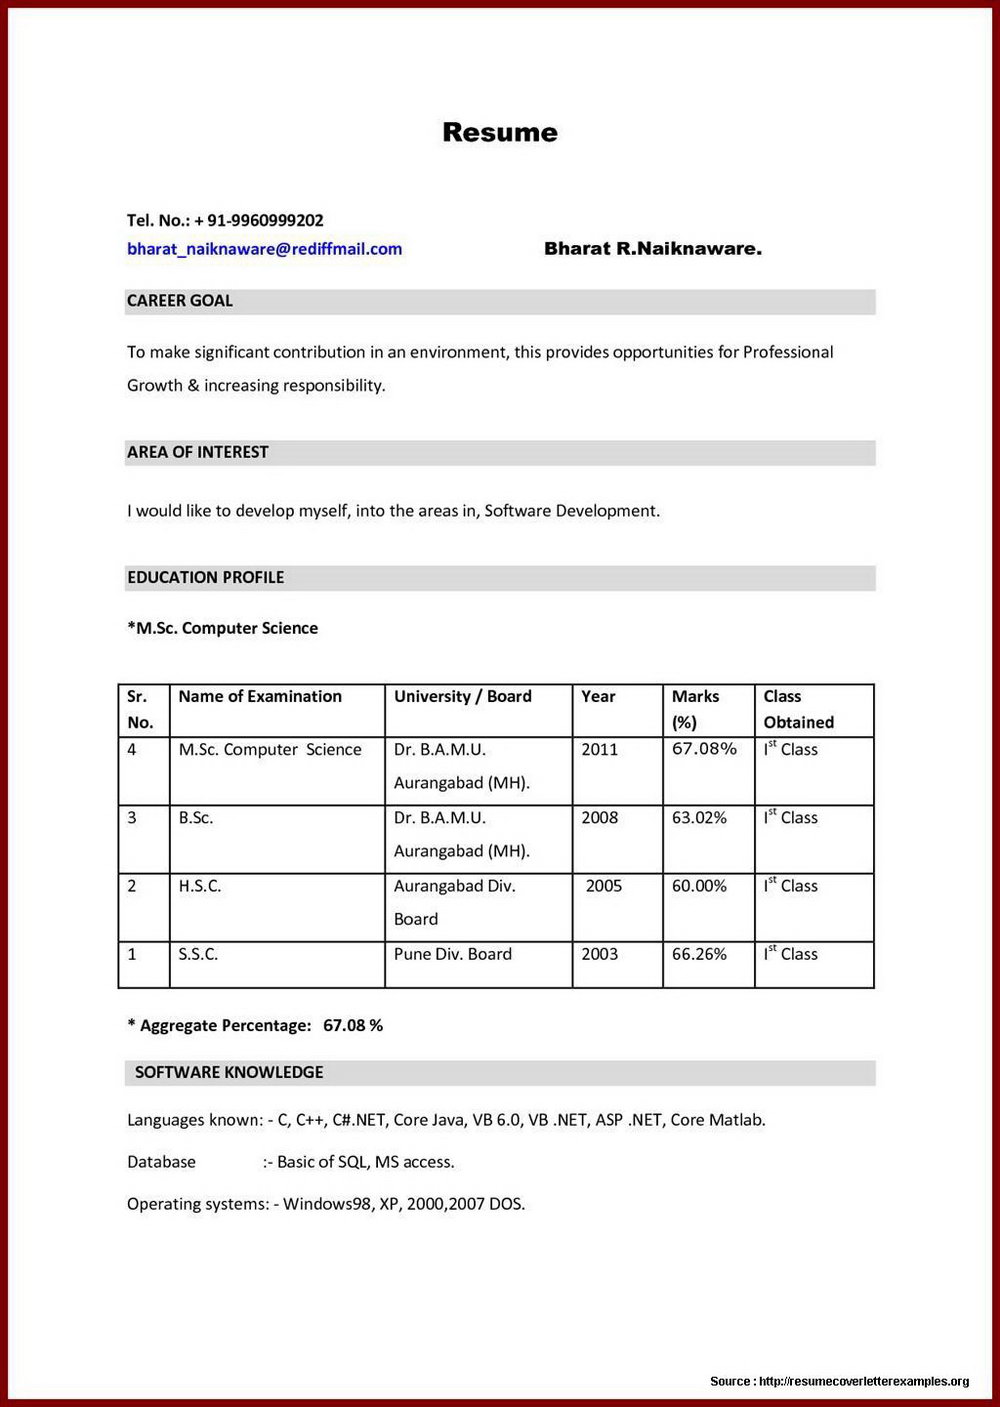 resume format simple pdf